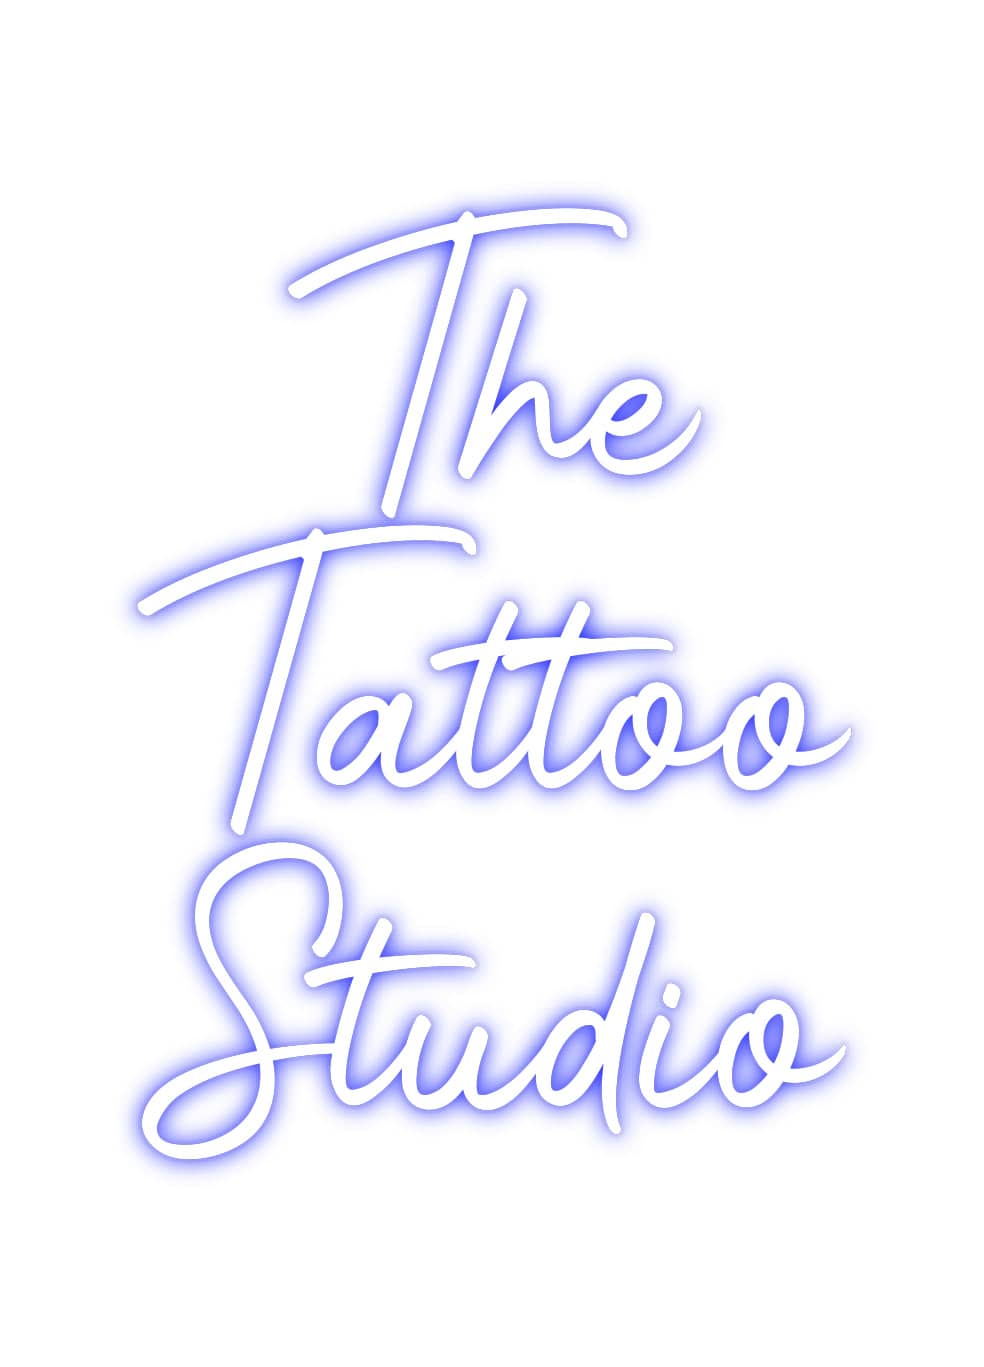 Custom Sign Metric Units The
Tattoo 
...